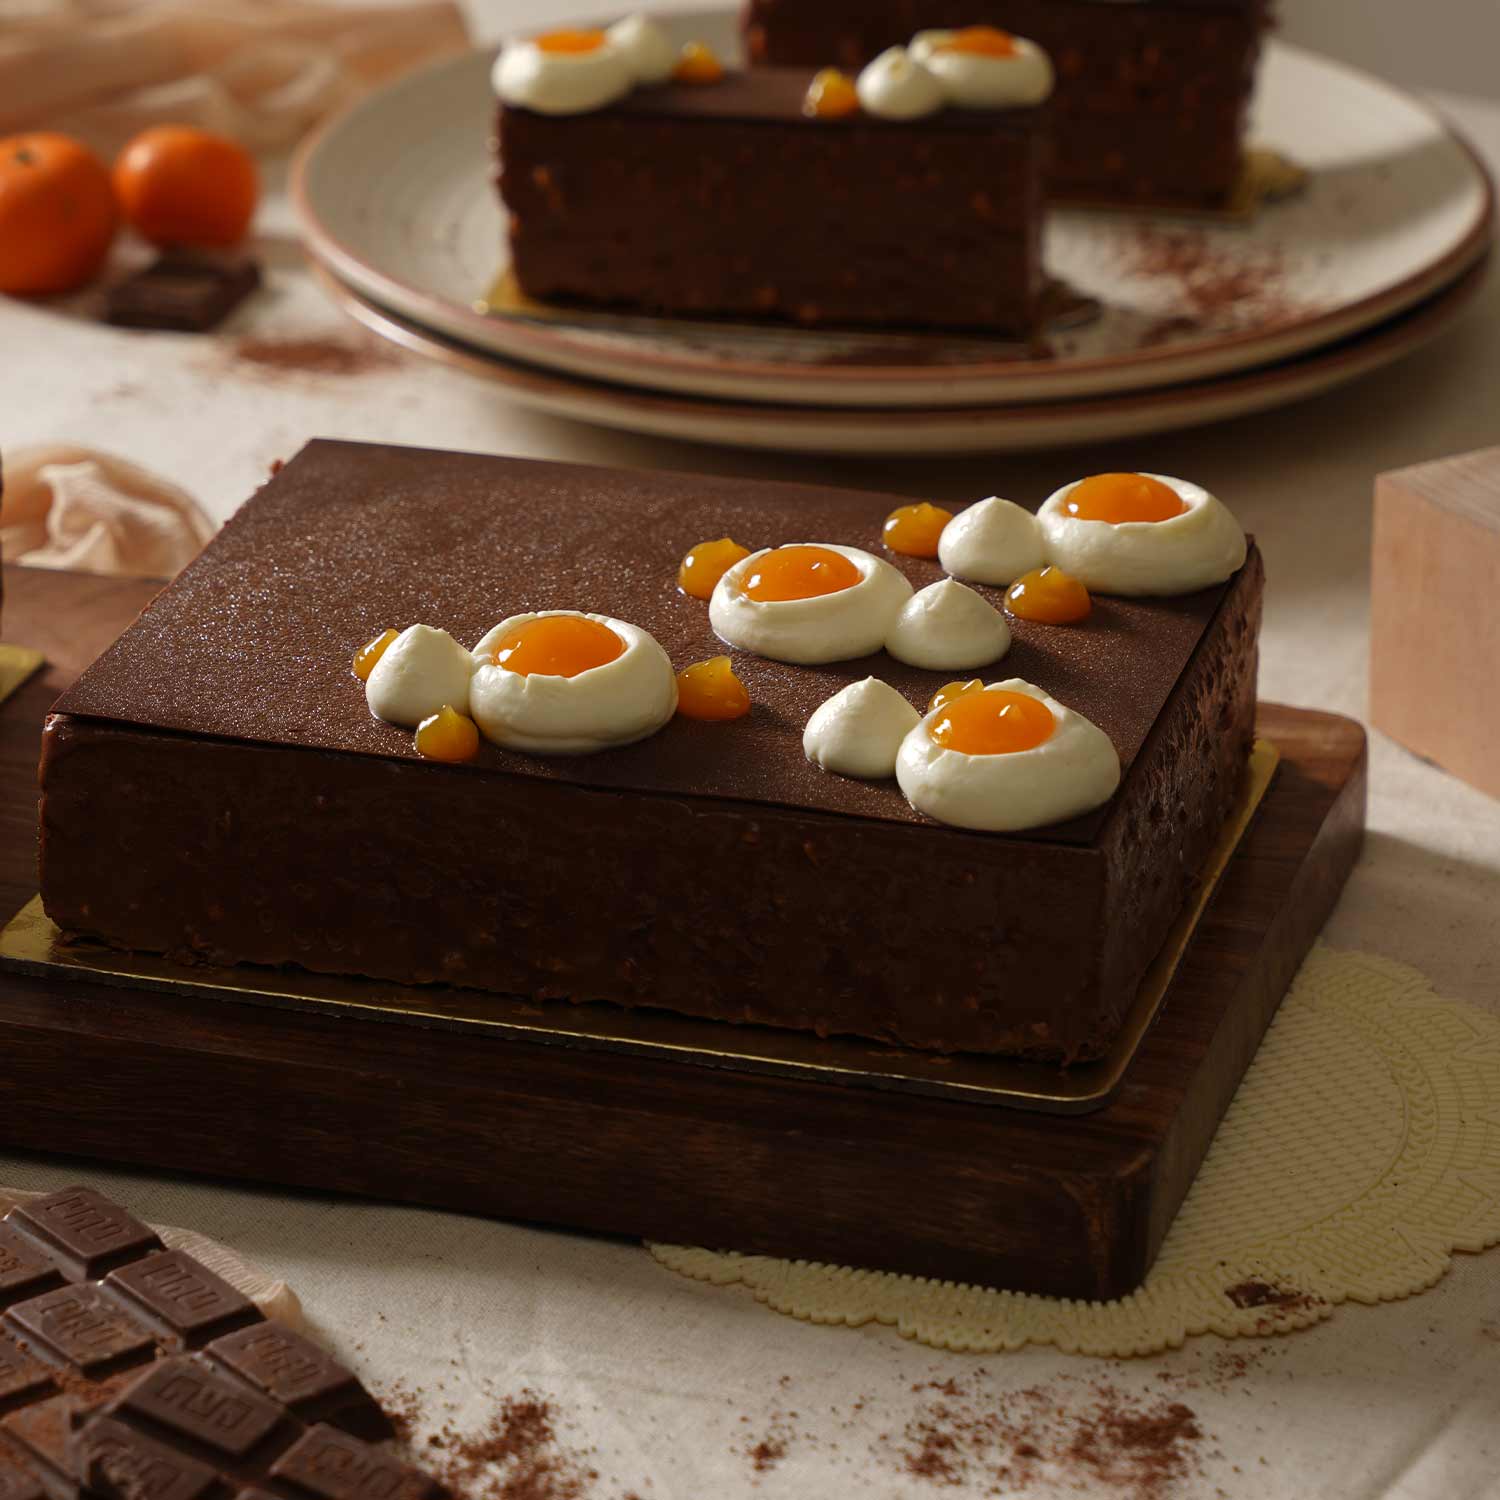 Sachertorte | Classic European chocolate cake with layer of apricot jam